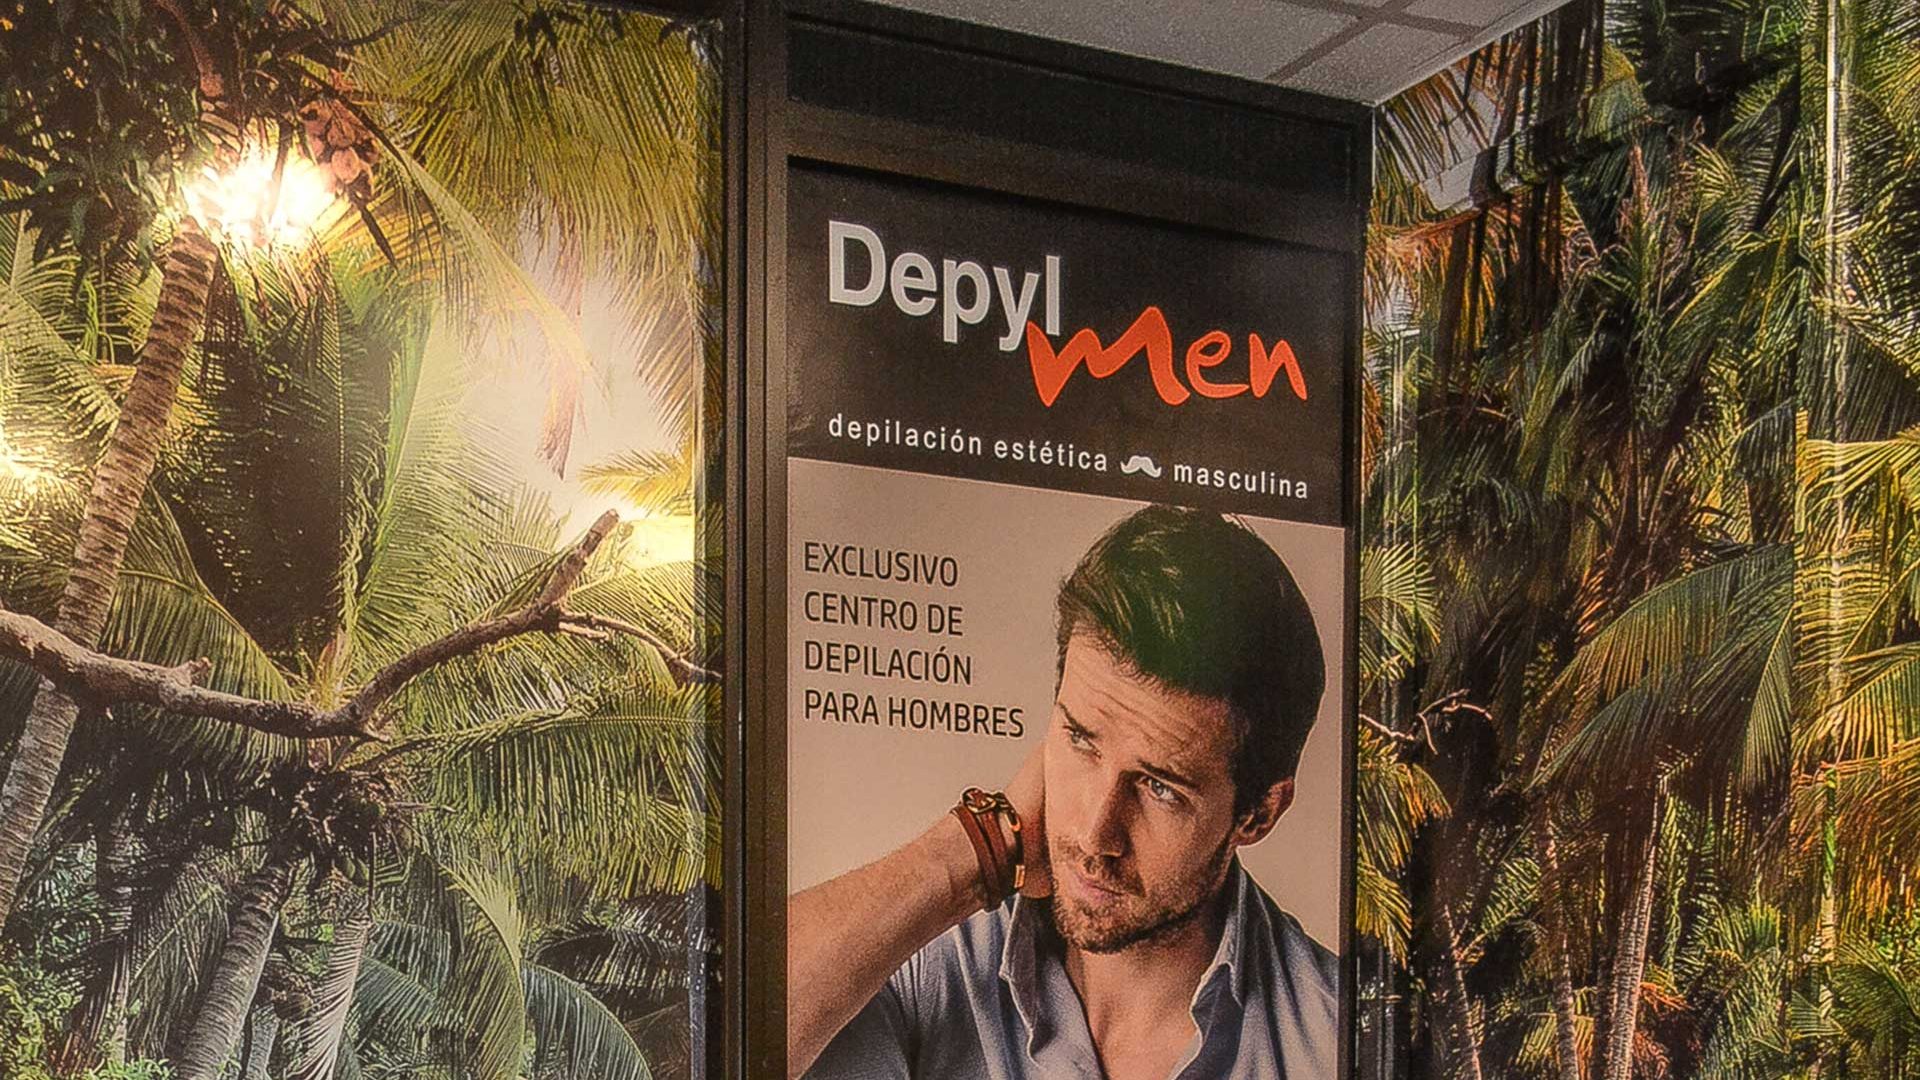 Centro Estética Masculina Depylmen